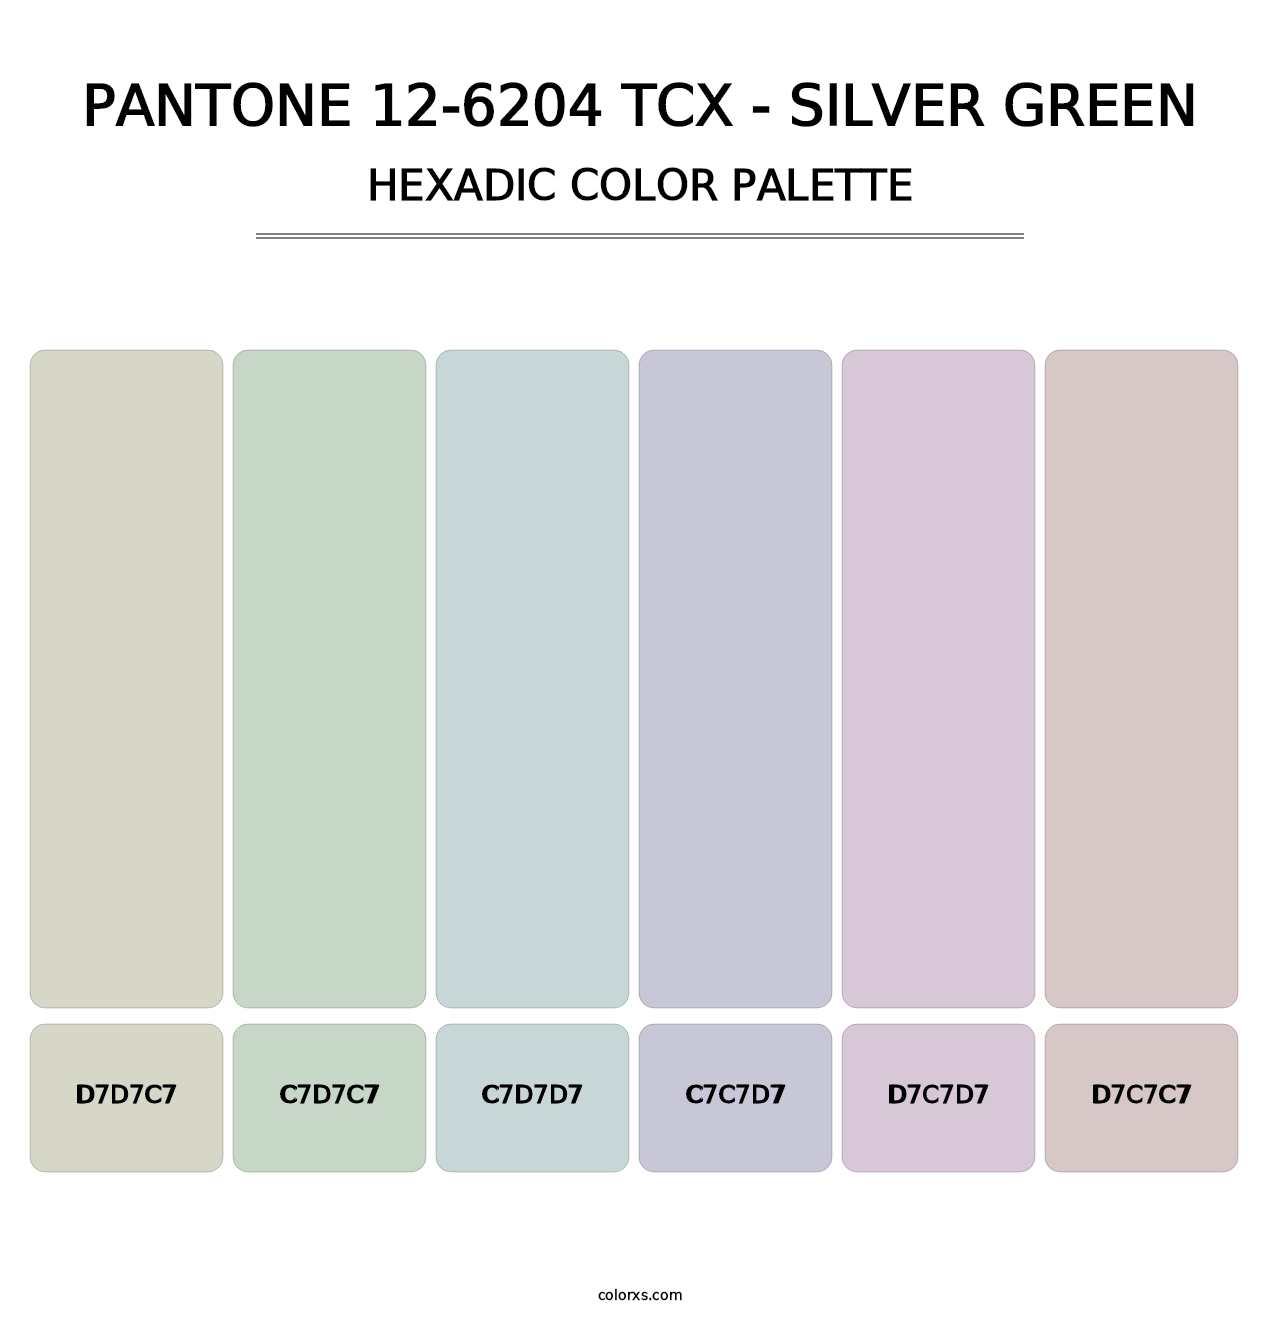 PANTONE 12-6204 TCX - Silver Green - Hexadic Color Palette